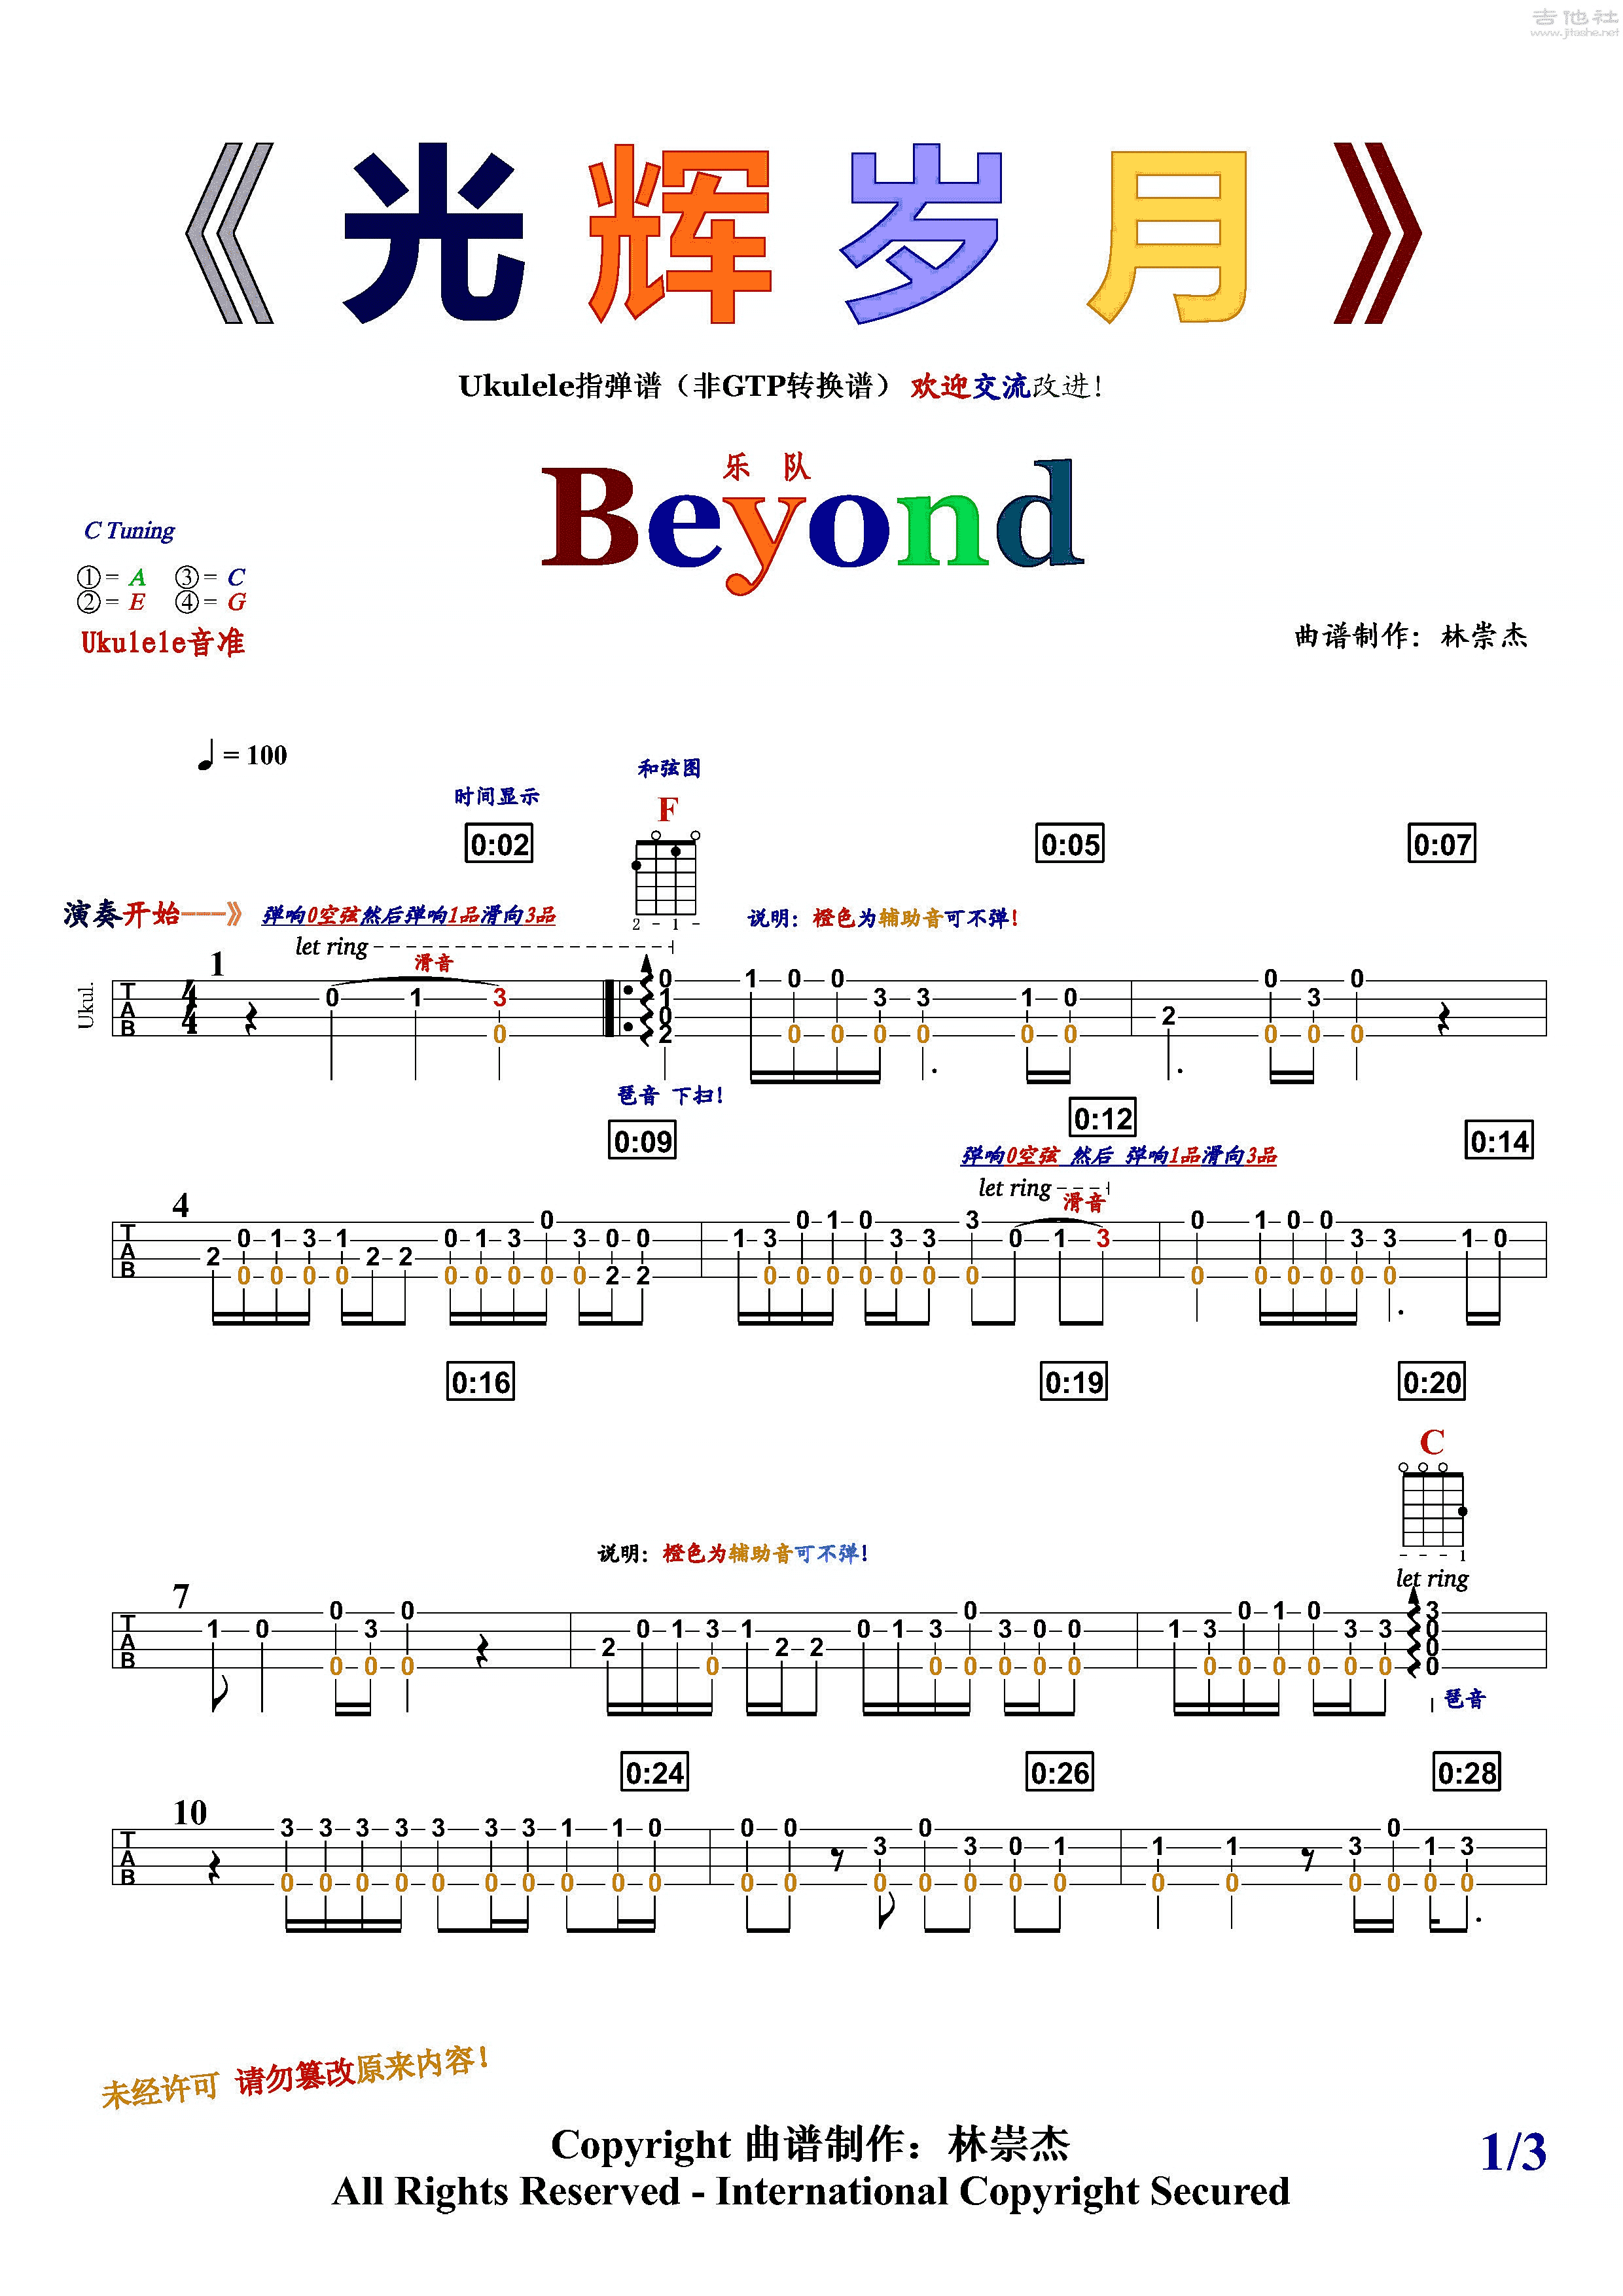 Beyond - 光辉岁月 [光辉岁月 Beyond Beyond Beyond Beyond Beyond Beyond Beyond Beyond Beyond Beyond Beyond ...